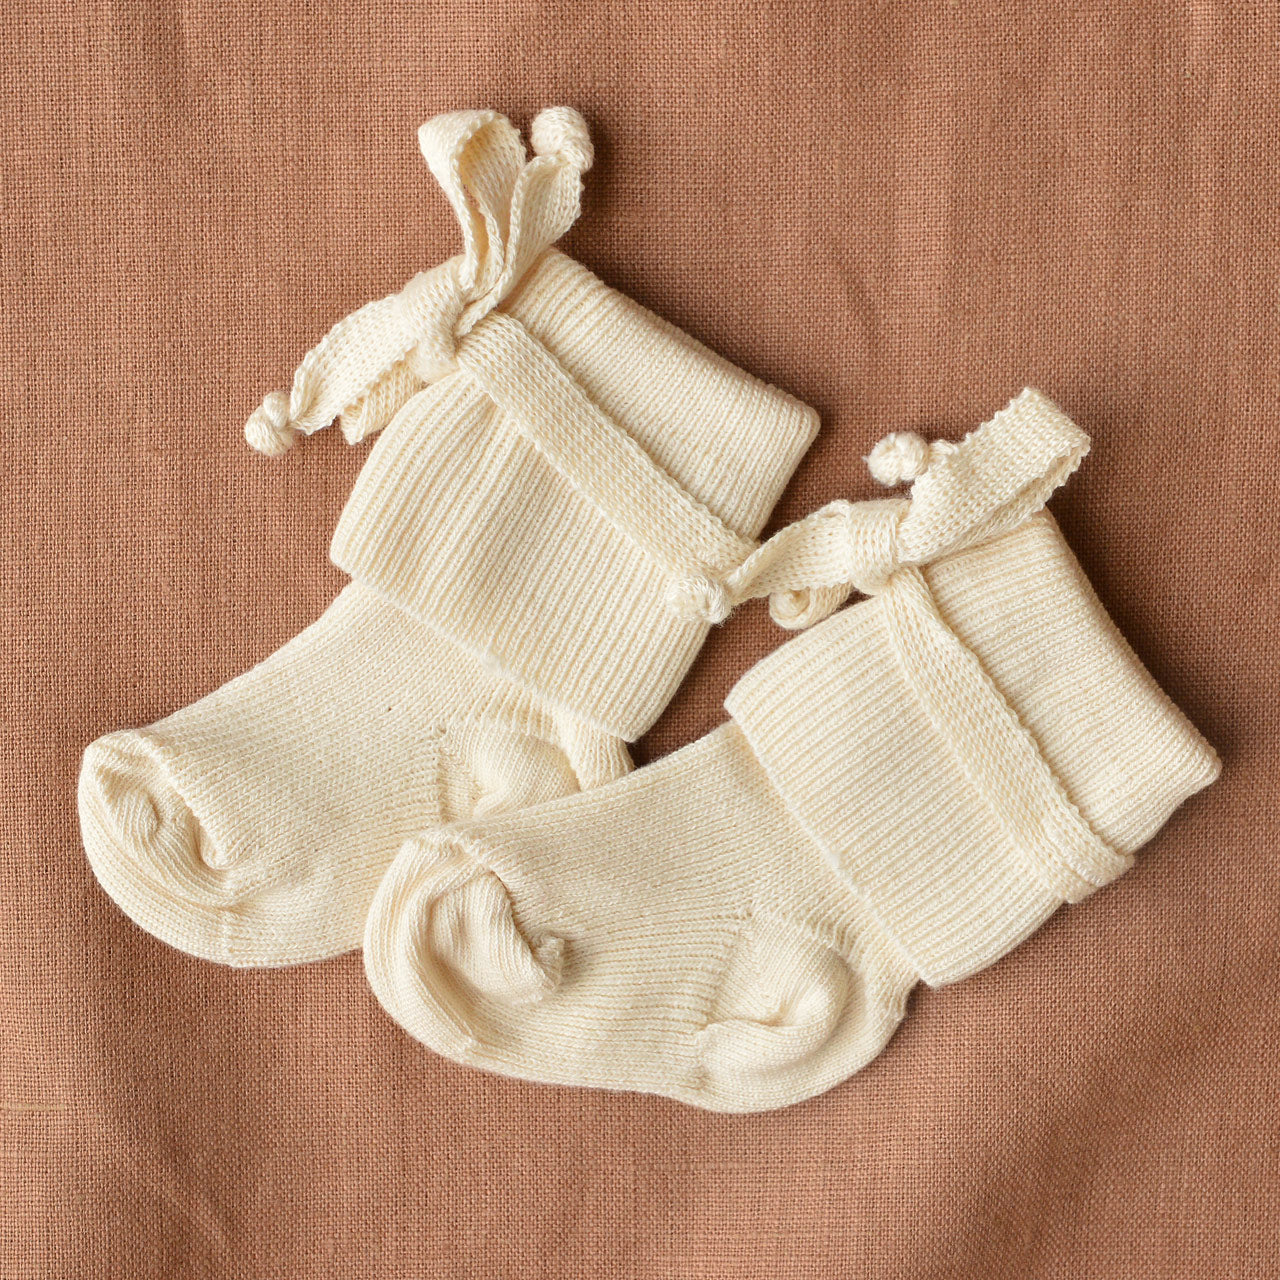 Newborn Baby Socks/Booties - 100% Organic Cotton